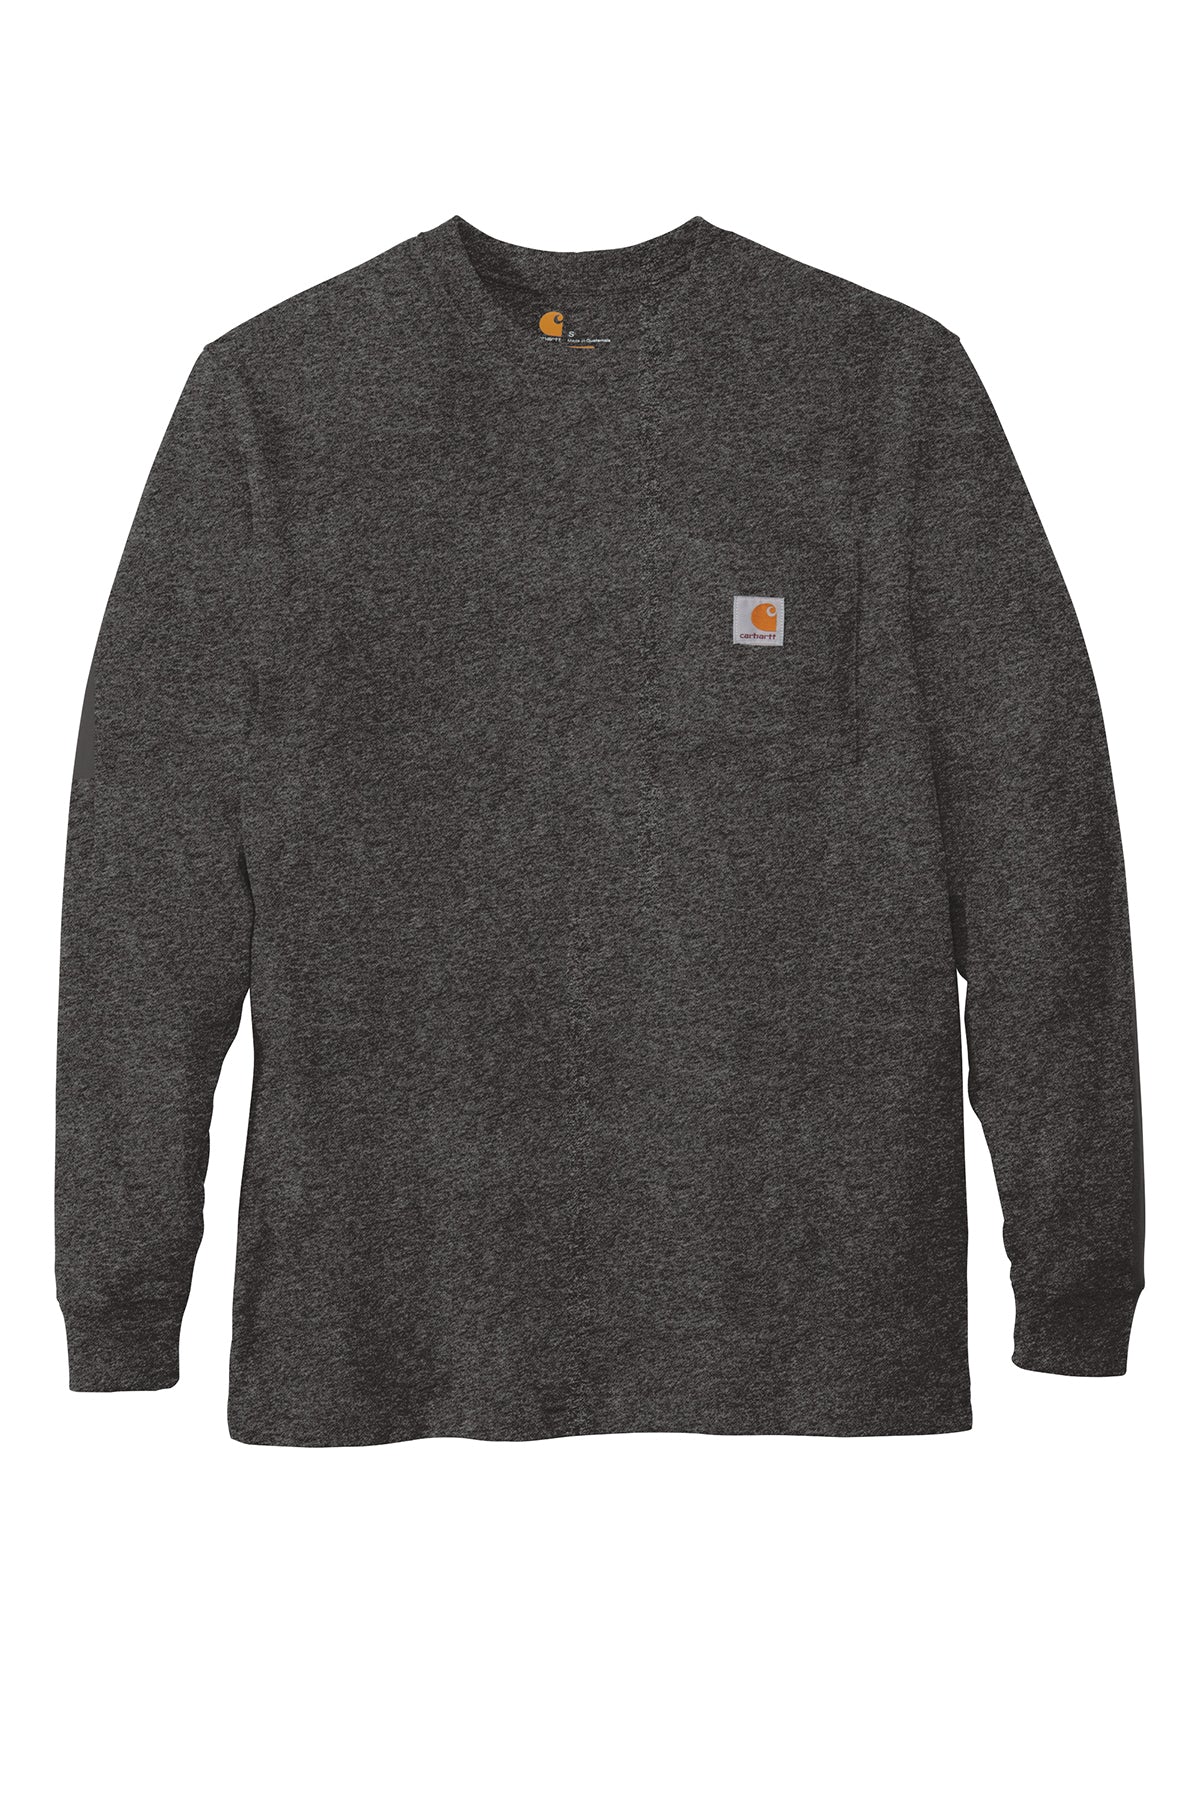 Carhartt® - Workwear Pocket Long Sleeve T-Shirt - CTK126